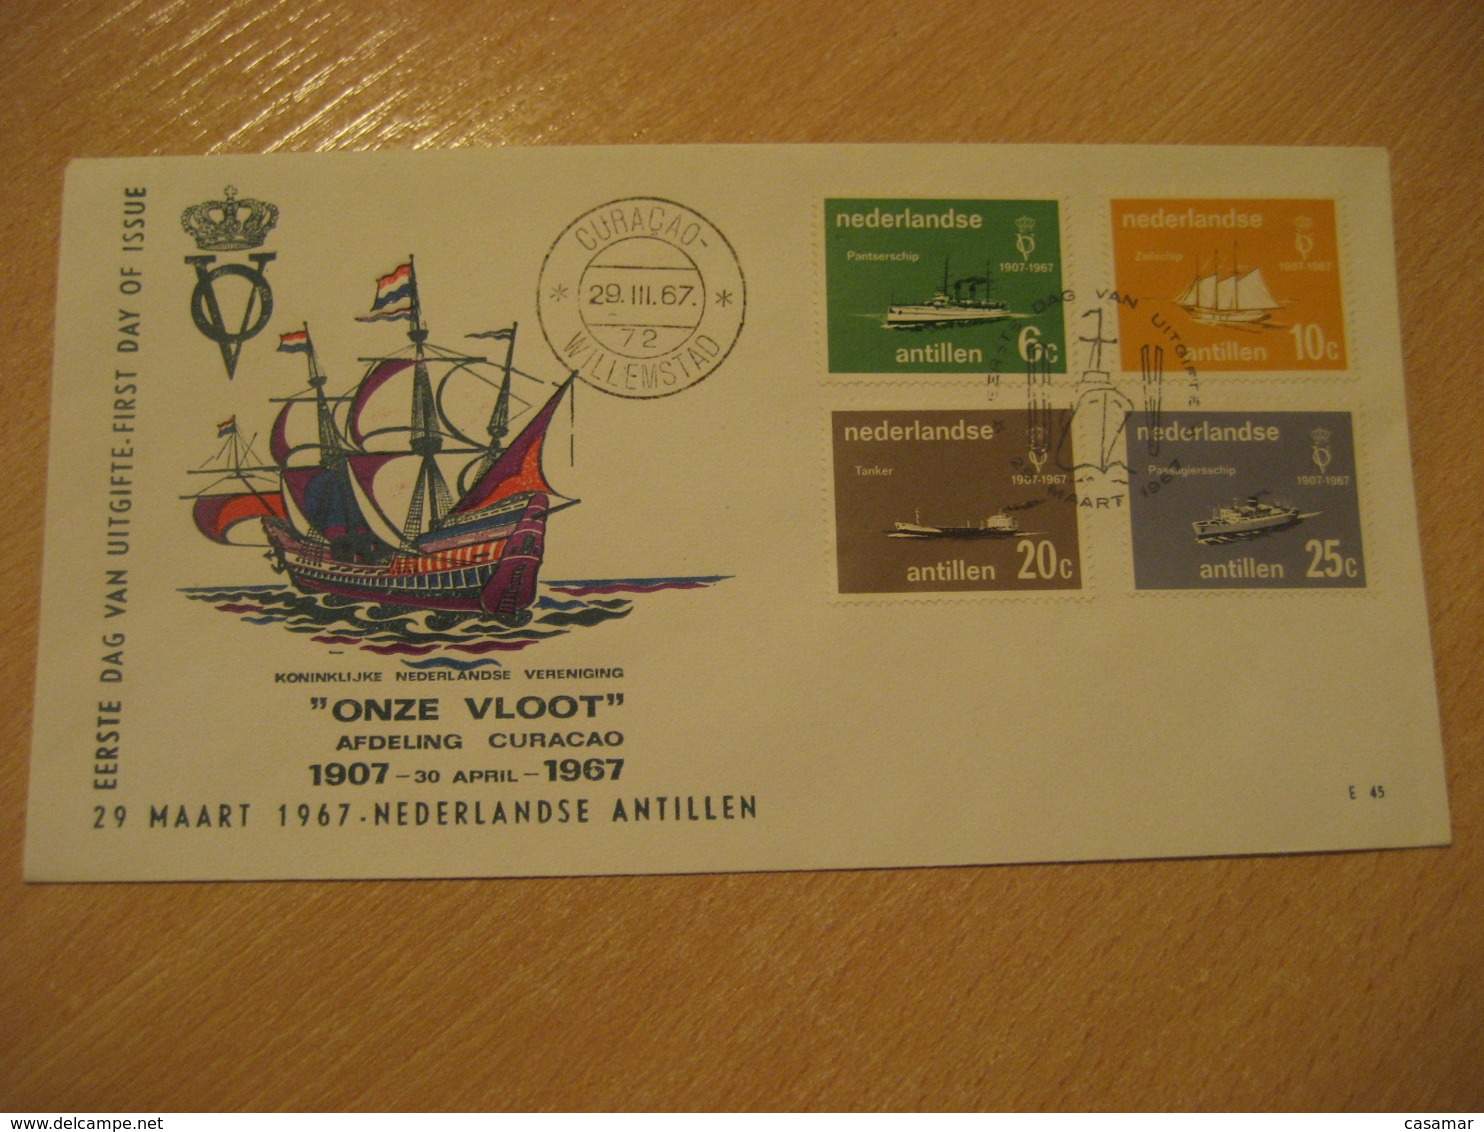 Netherlands Antilles Curaçao Willemstad 1967 Our Fleet FDC Cancel Cover West Indies - Antilles